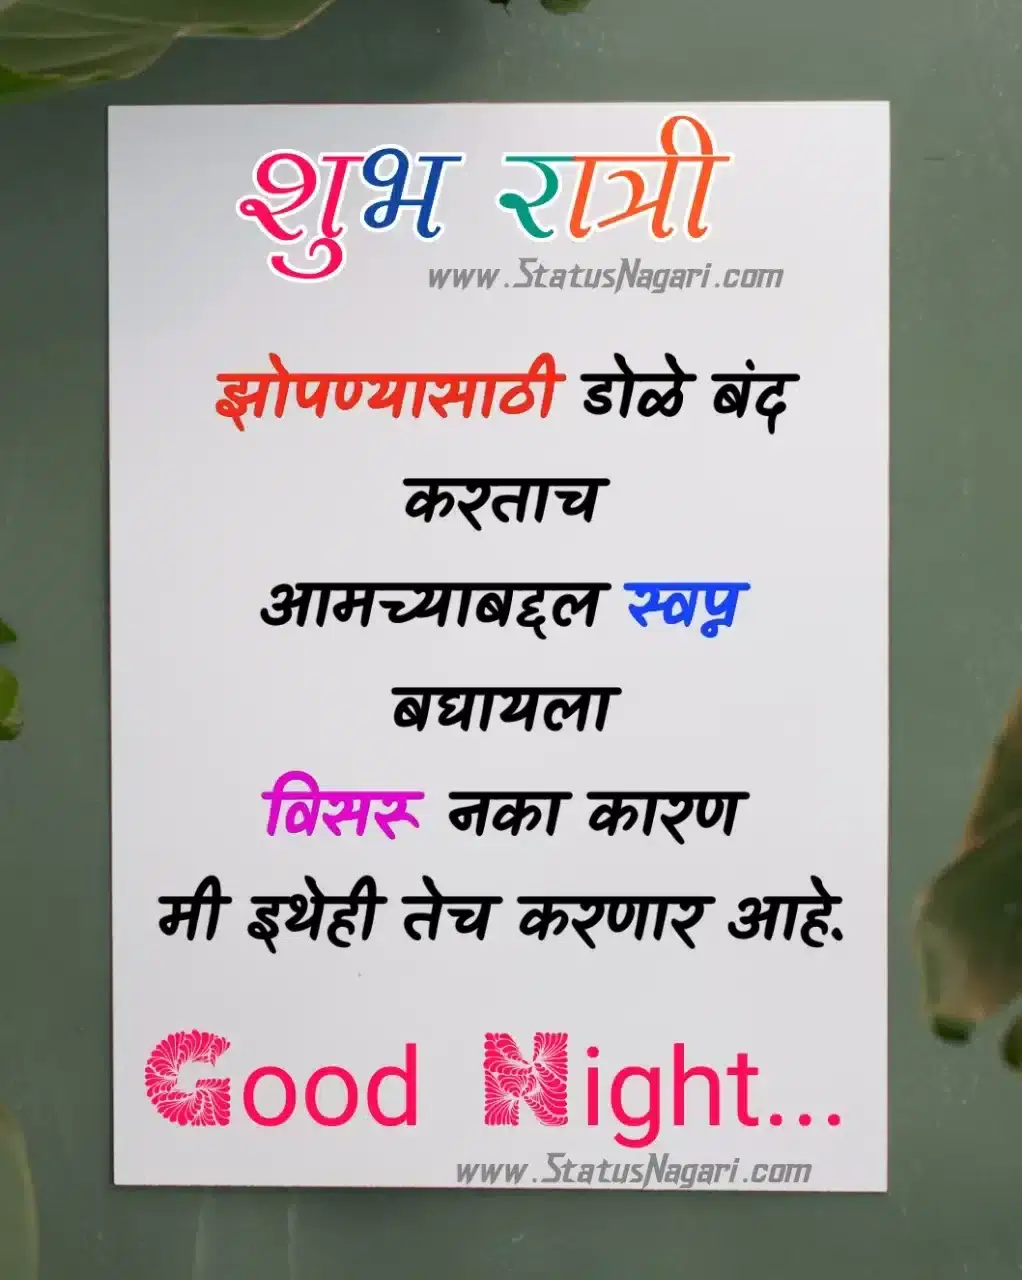 शुभ रात्री नवीन फोटो good night marathi images good night marathi message शुभ रात्री मराठी गुड नाईट शुभ रात्री शुभ रात्री मराठी मेसेज शुभ रात्री फुले गुड नाईट #शुभ 